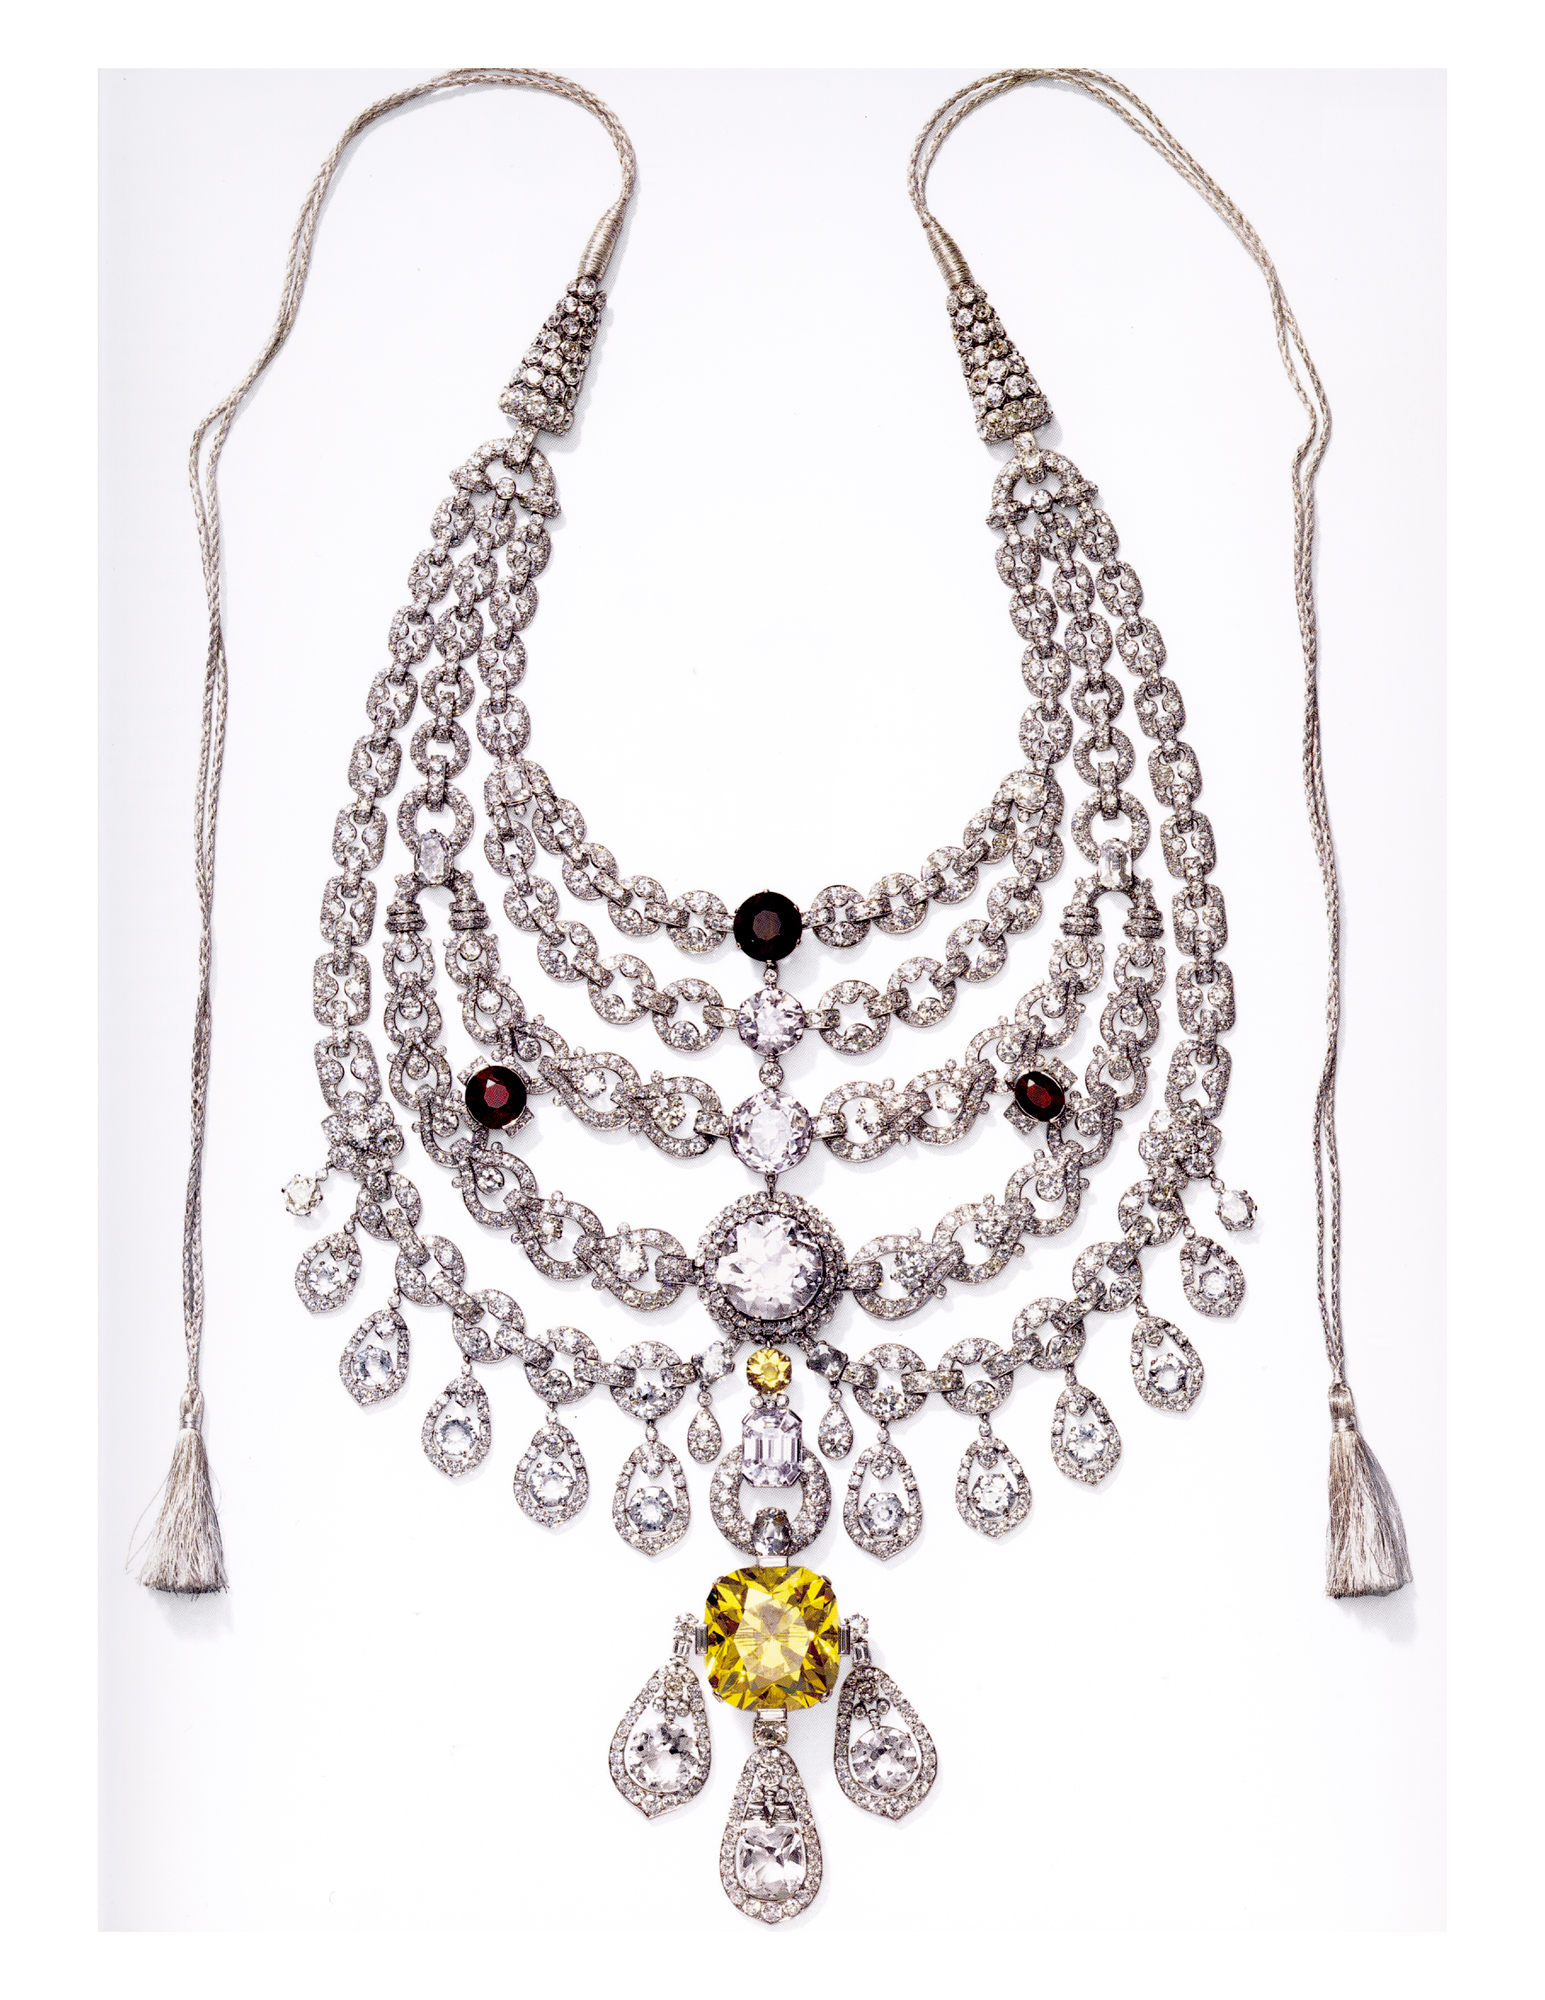  Maharajah Sir Bhupindra Singh of Patiala's&nbsp;Ceremonial necklace, Cartier, 1928 